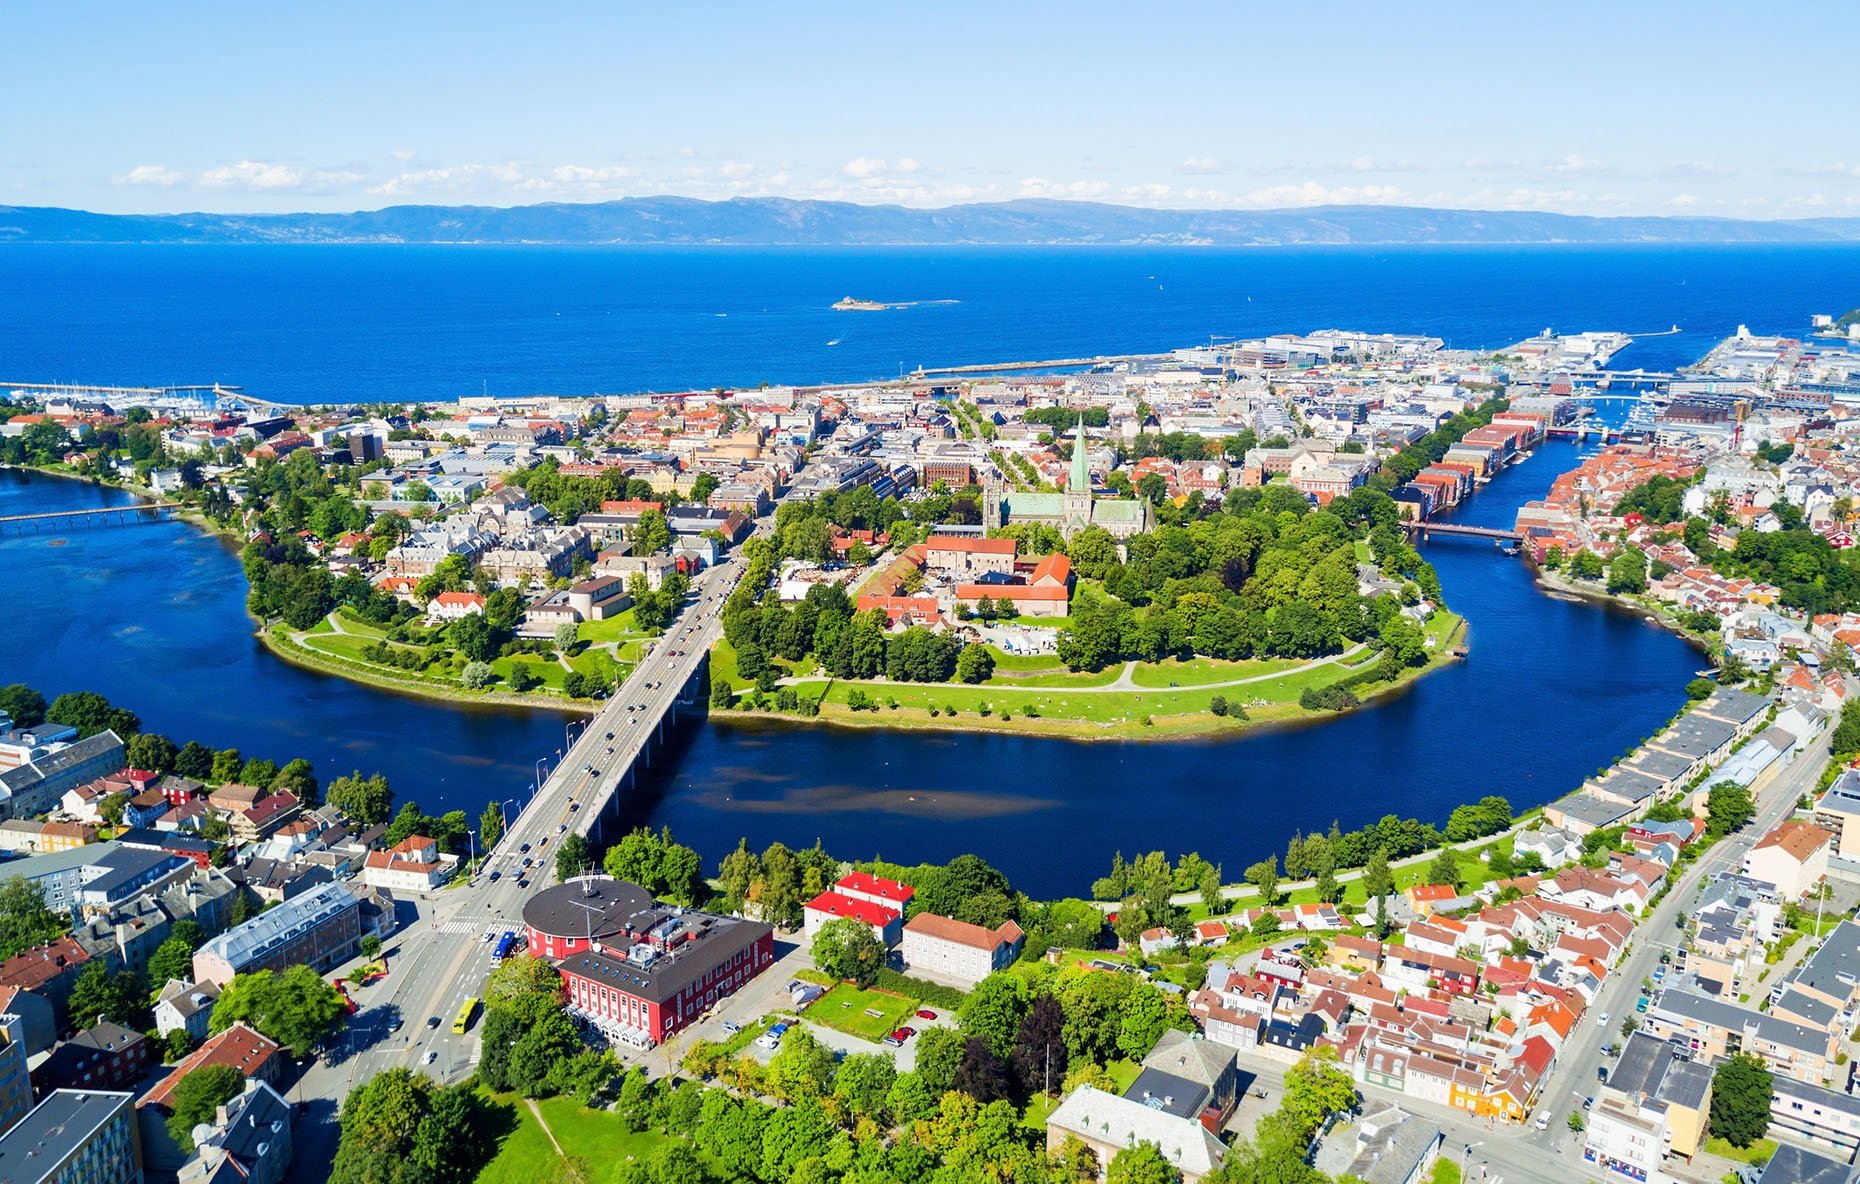 Trondheim seen from the air